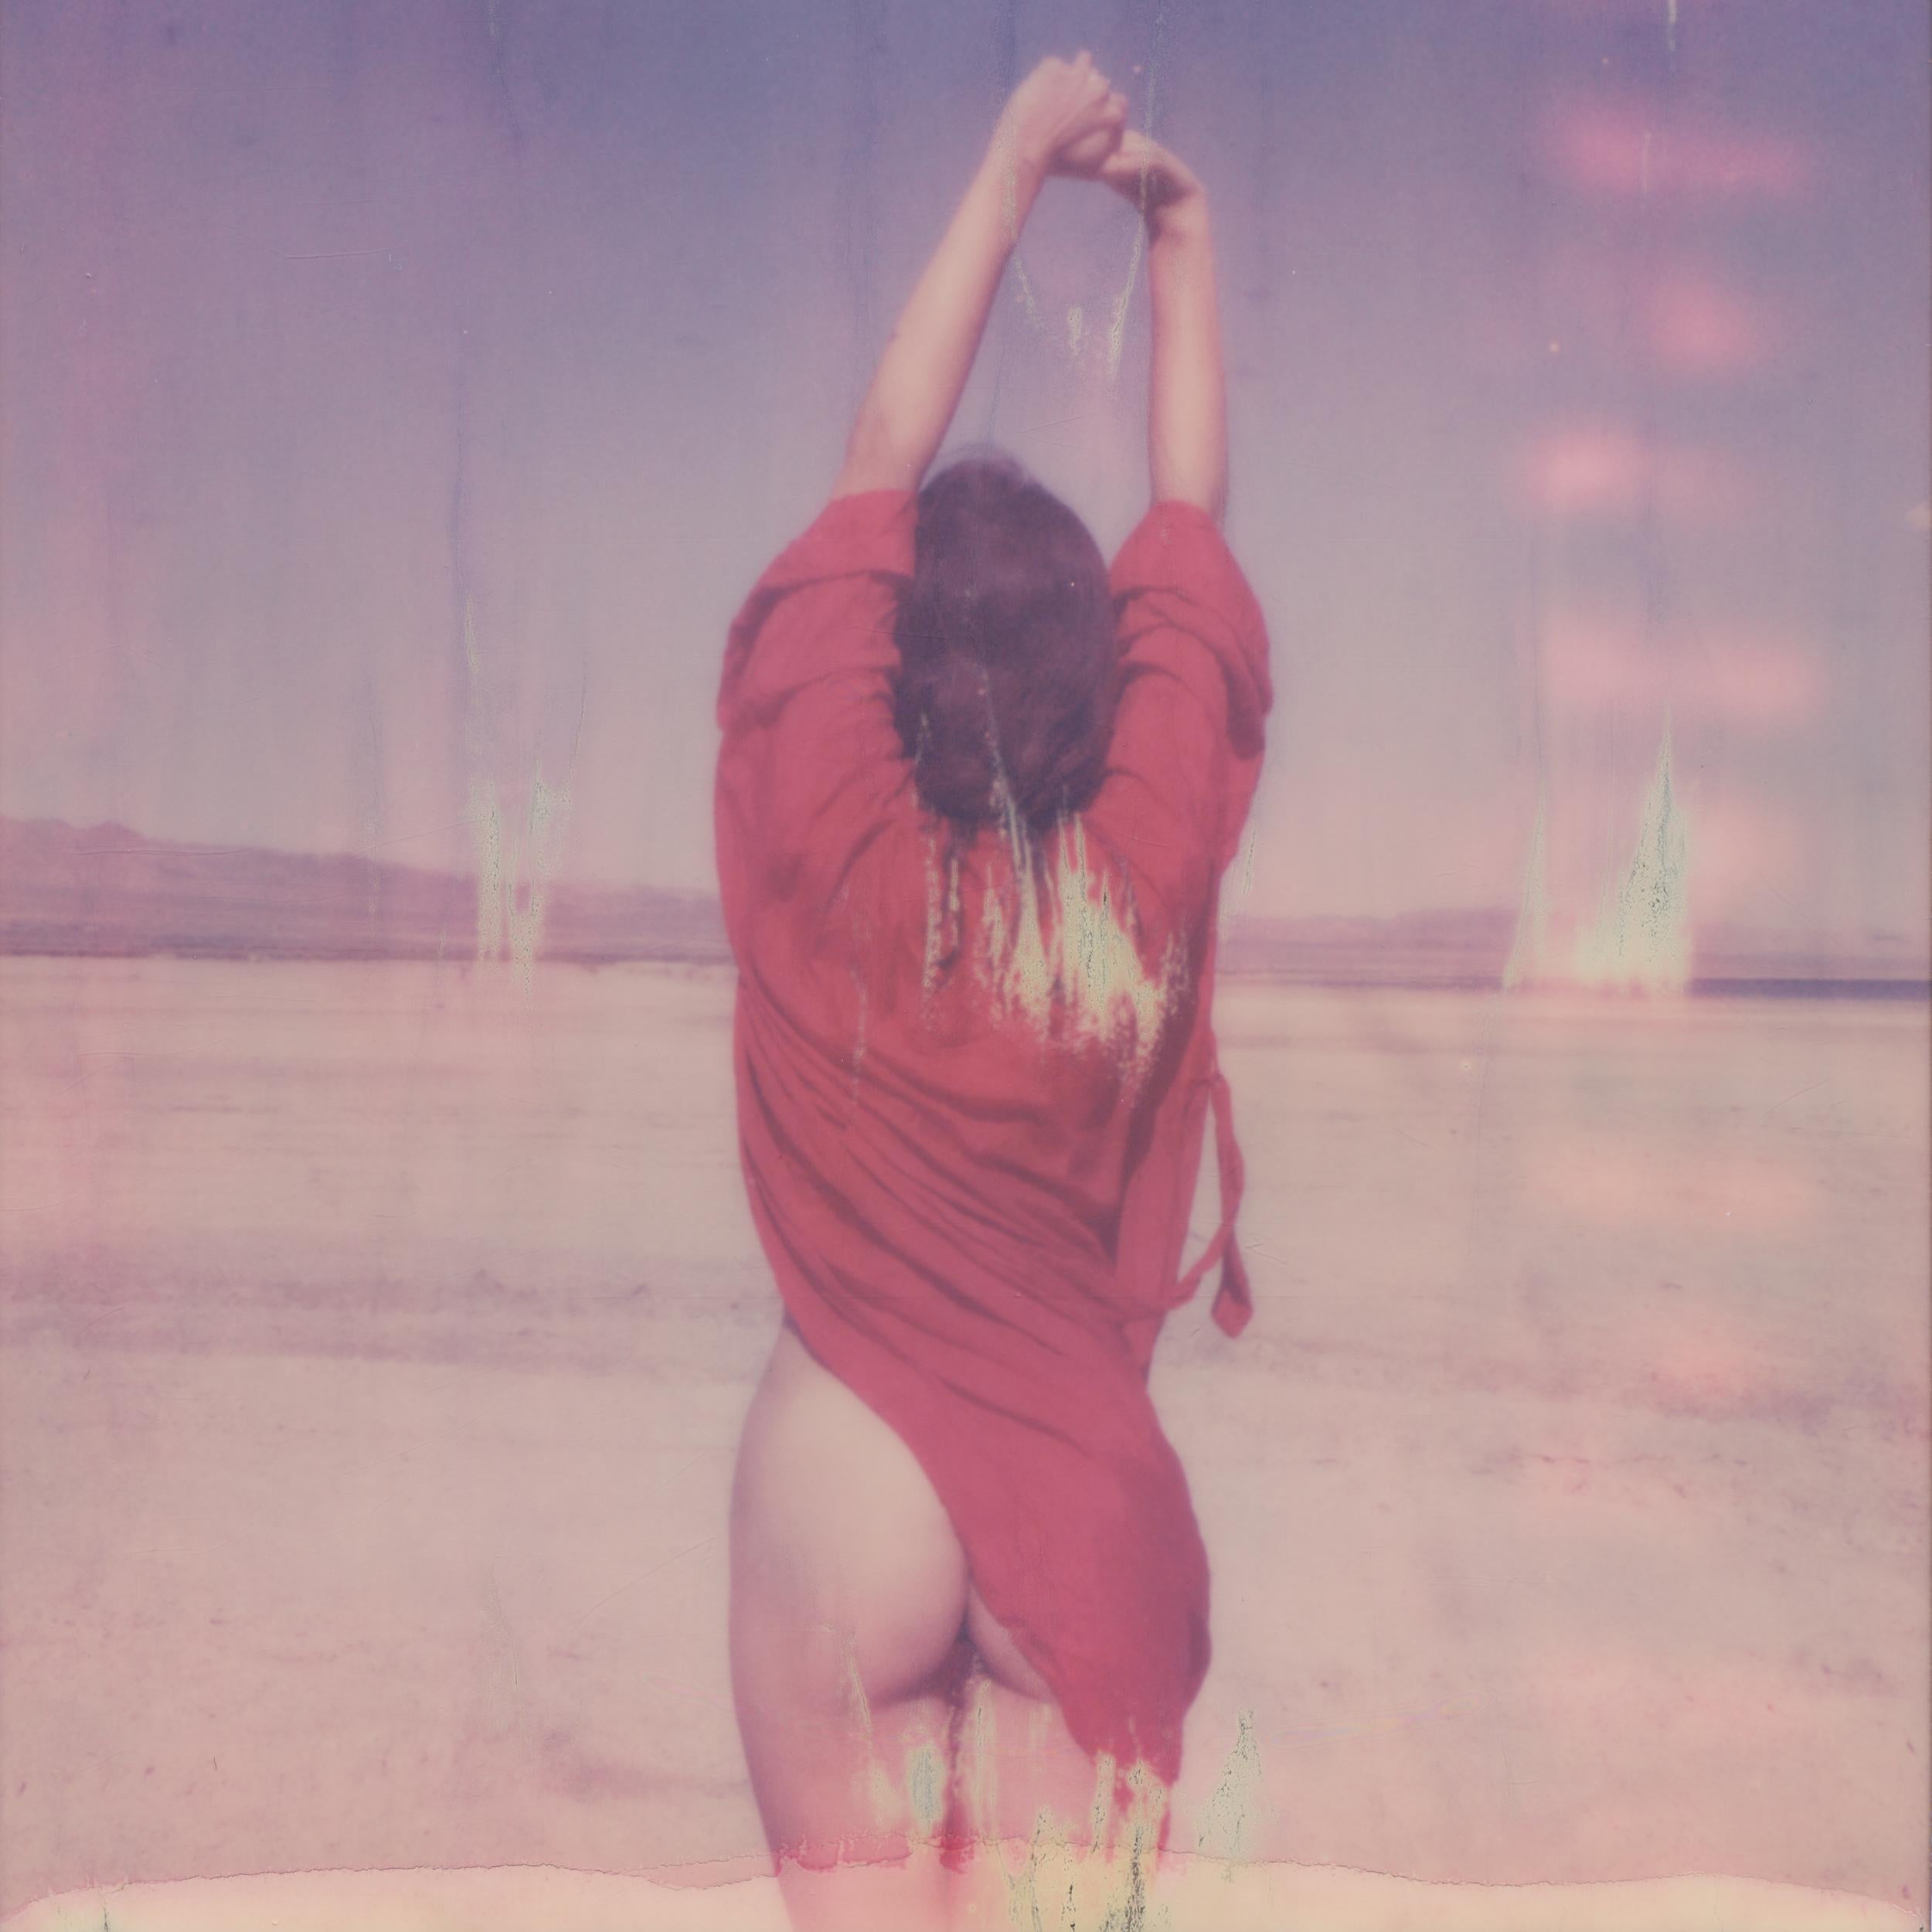 Nude Photograph Kirsten Thys van den Audenaerde - D'un rêve californien contemporain - Polaroid, couleur, femmes, XXIe siècle